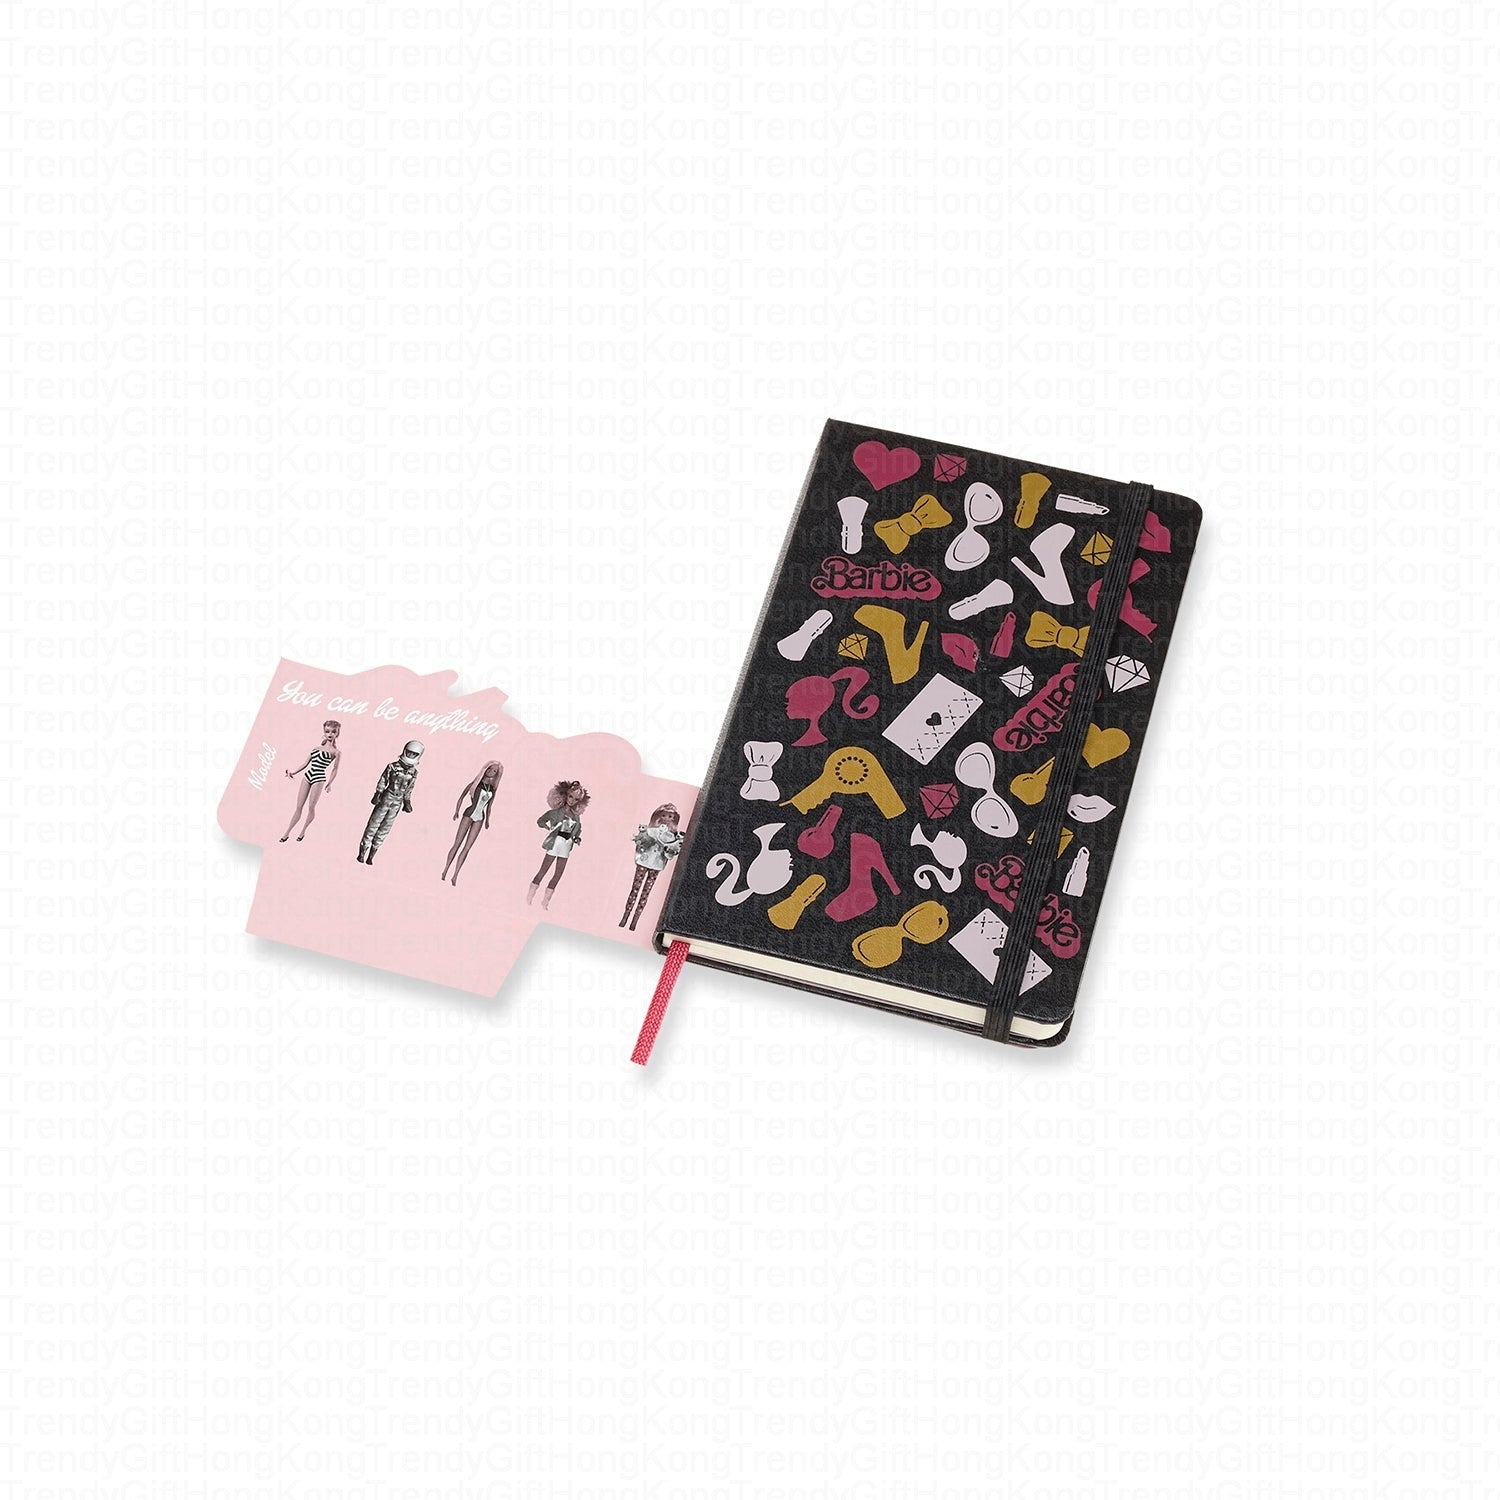 Moleskine Barbie Limited Edition Notebook - Large/Pocket trendygifthk